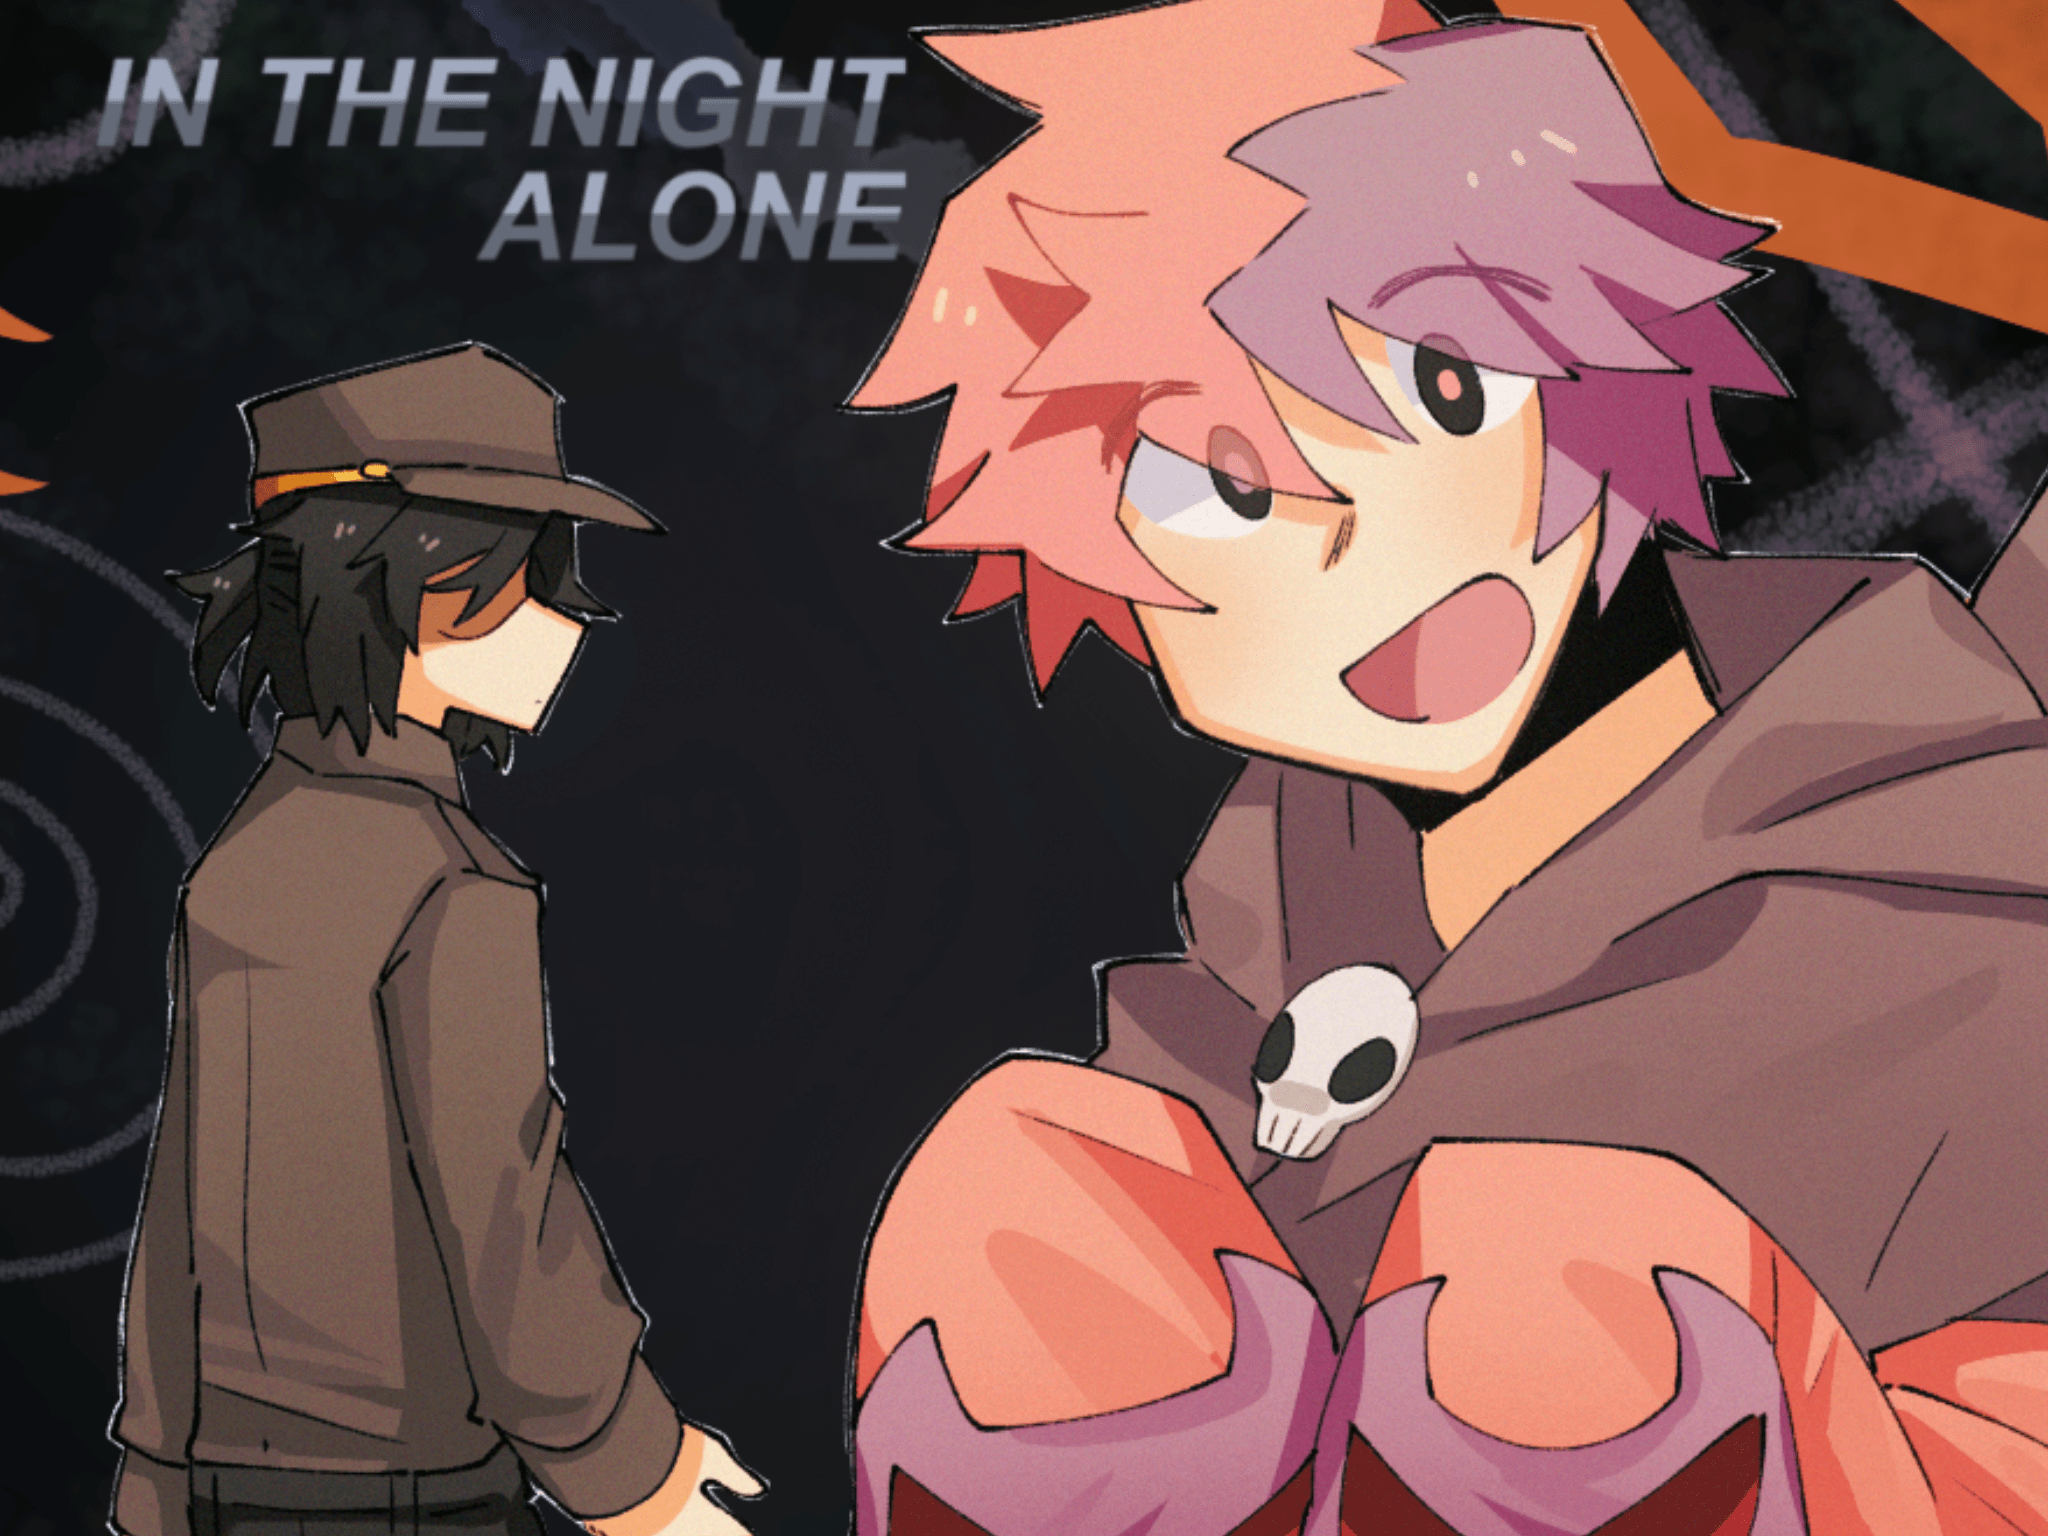 In the night alone